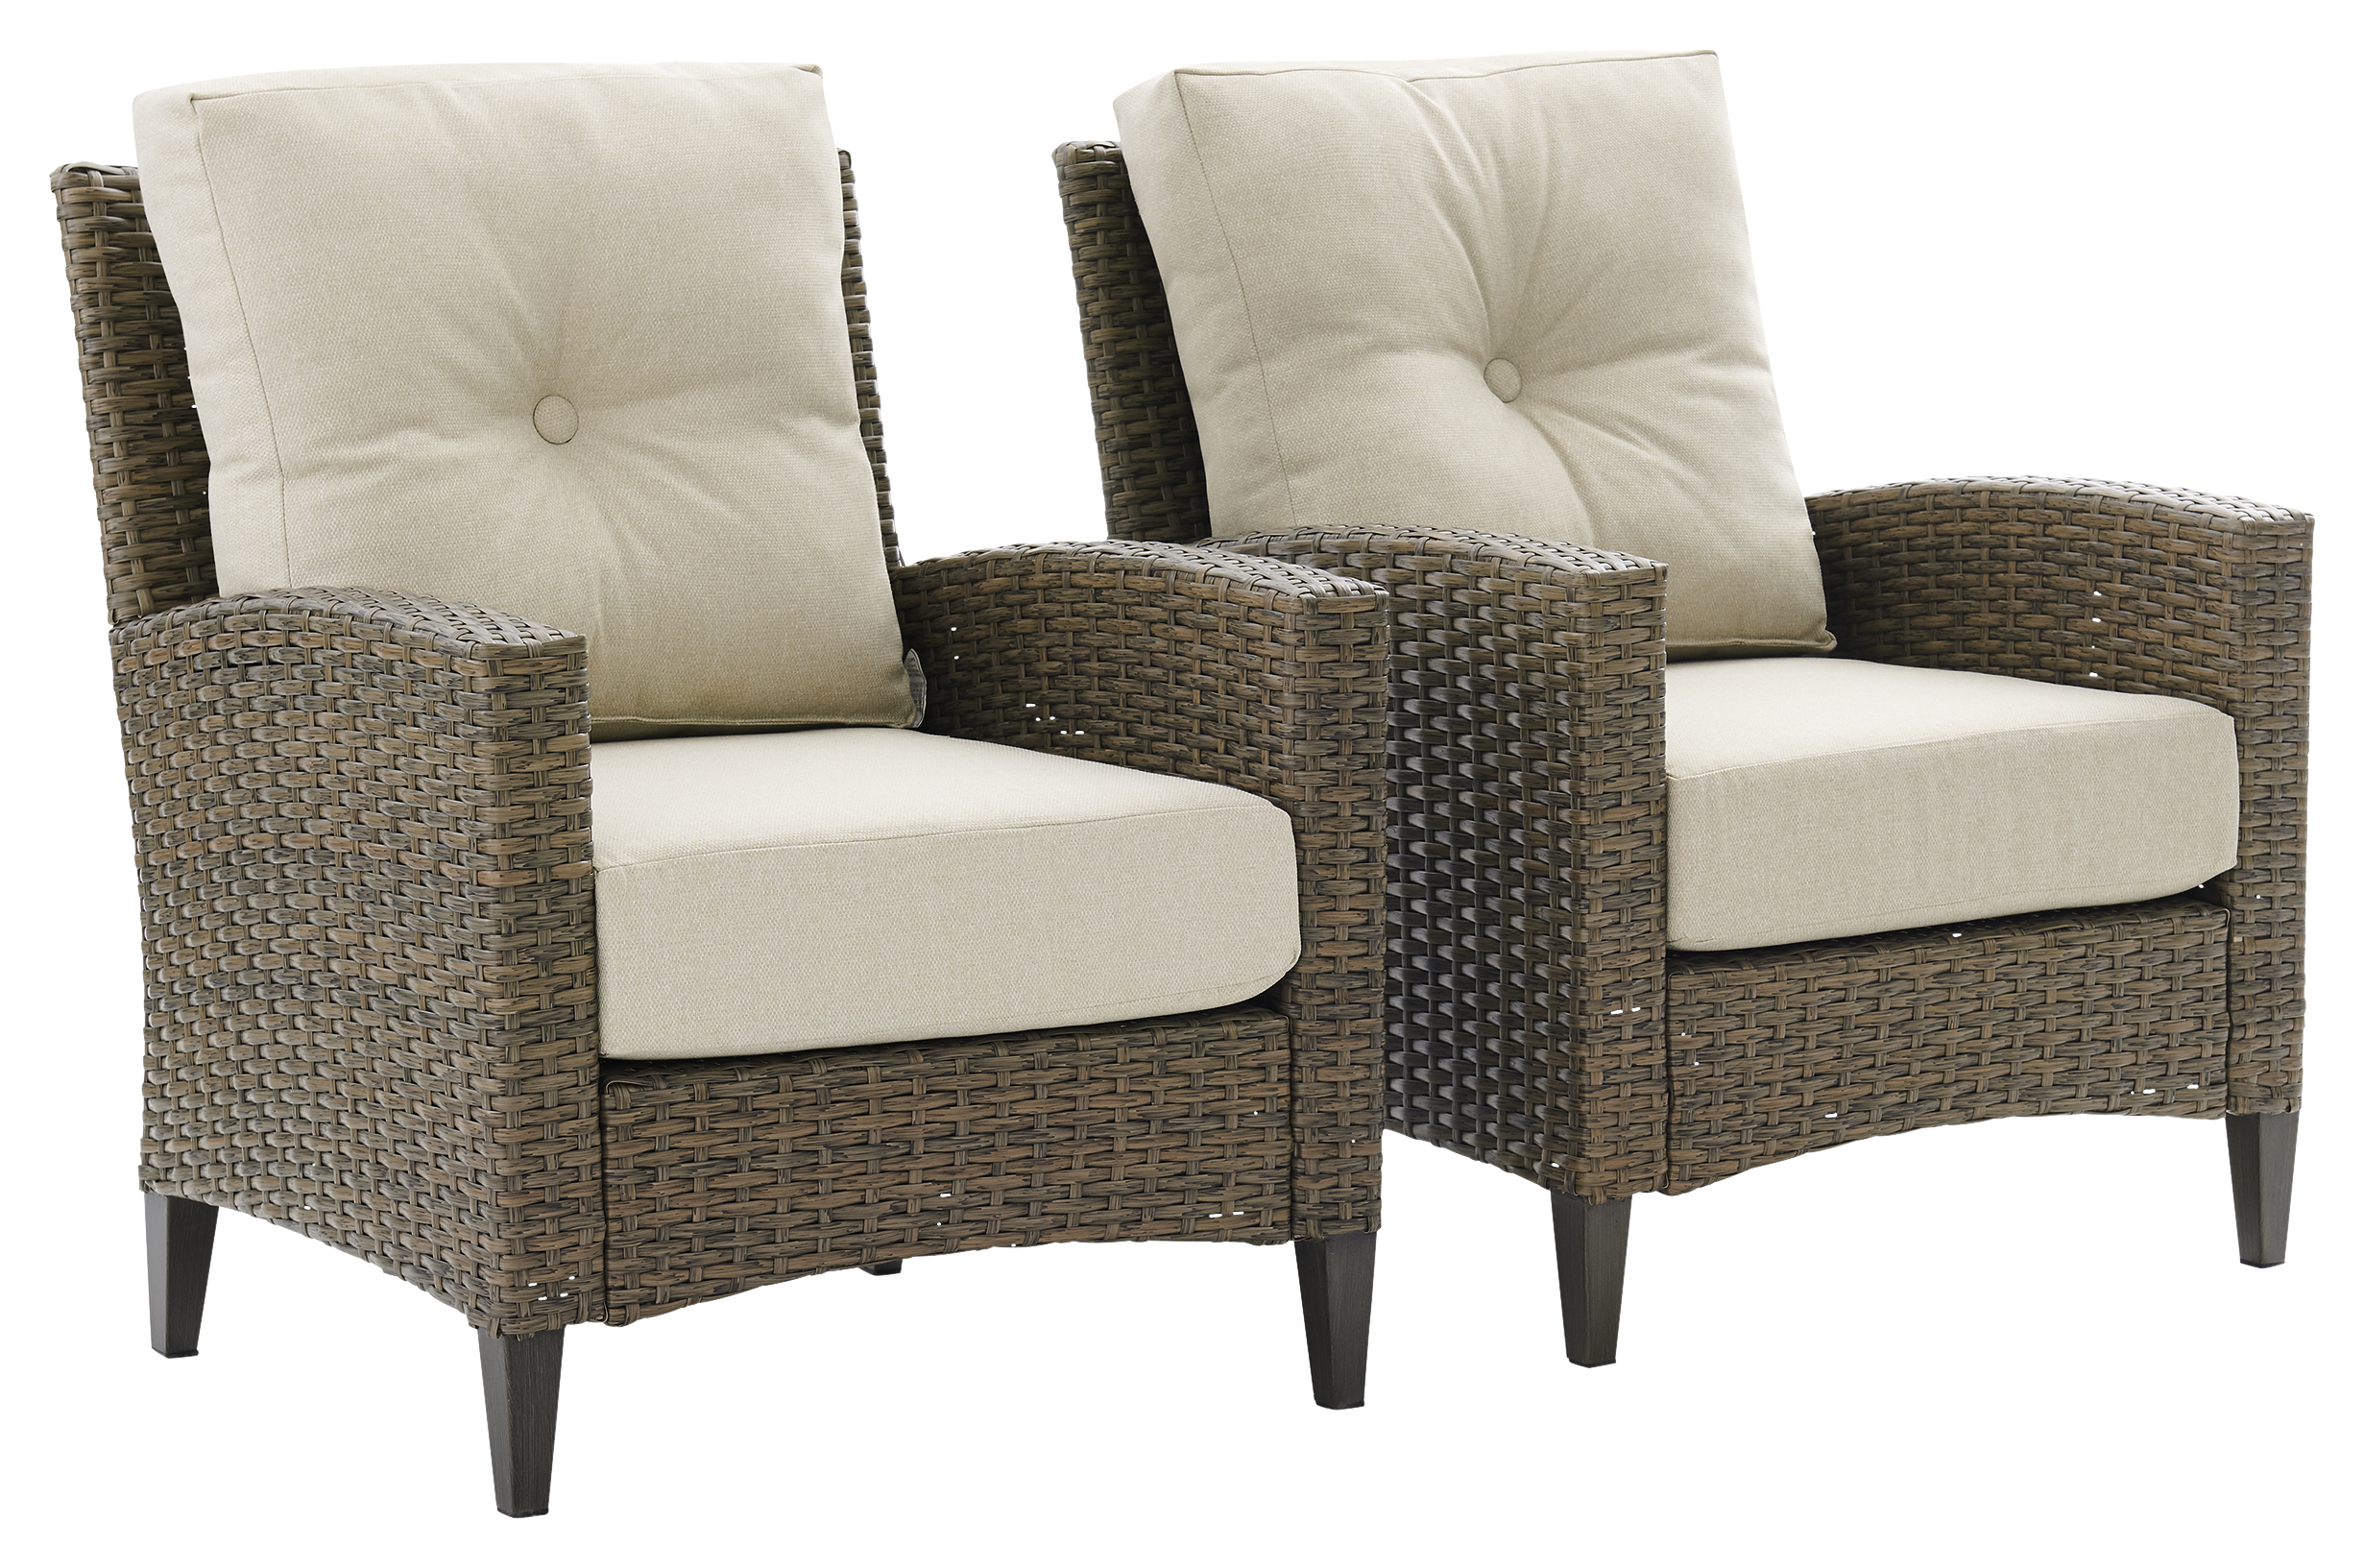 Crosley Rockport High-Back Outdoor Wicker Chair 2-Piece Set